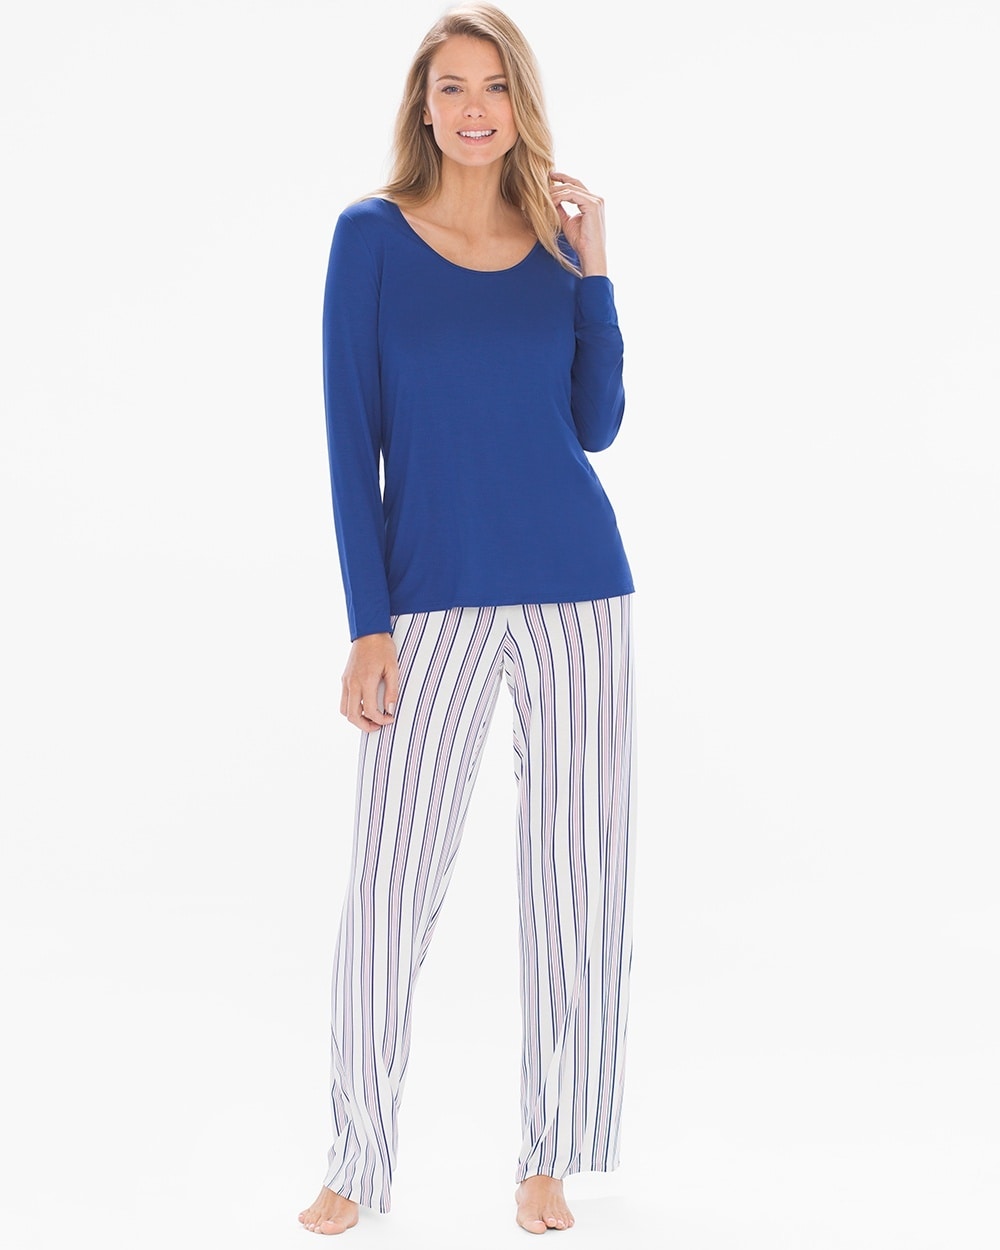 Cool Nights Long Sleeve Pajama Set Noble Stripe Sapphire RG